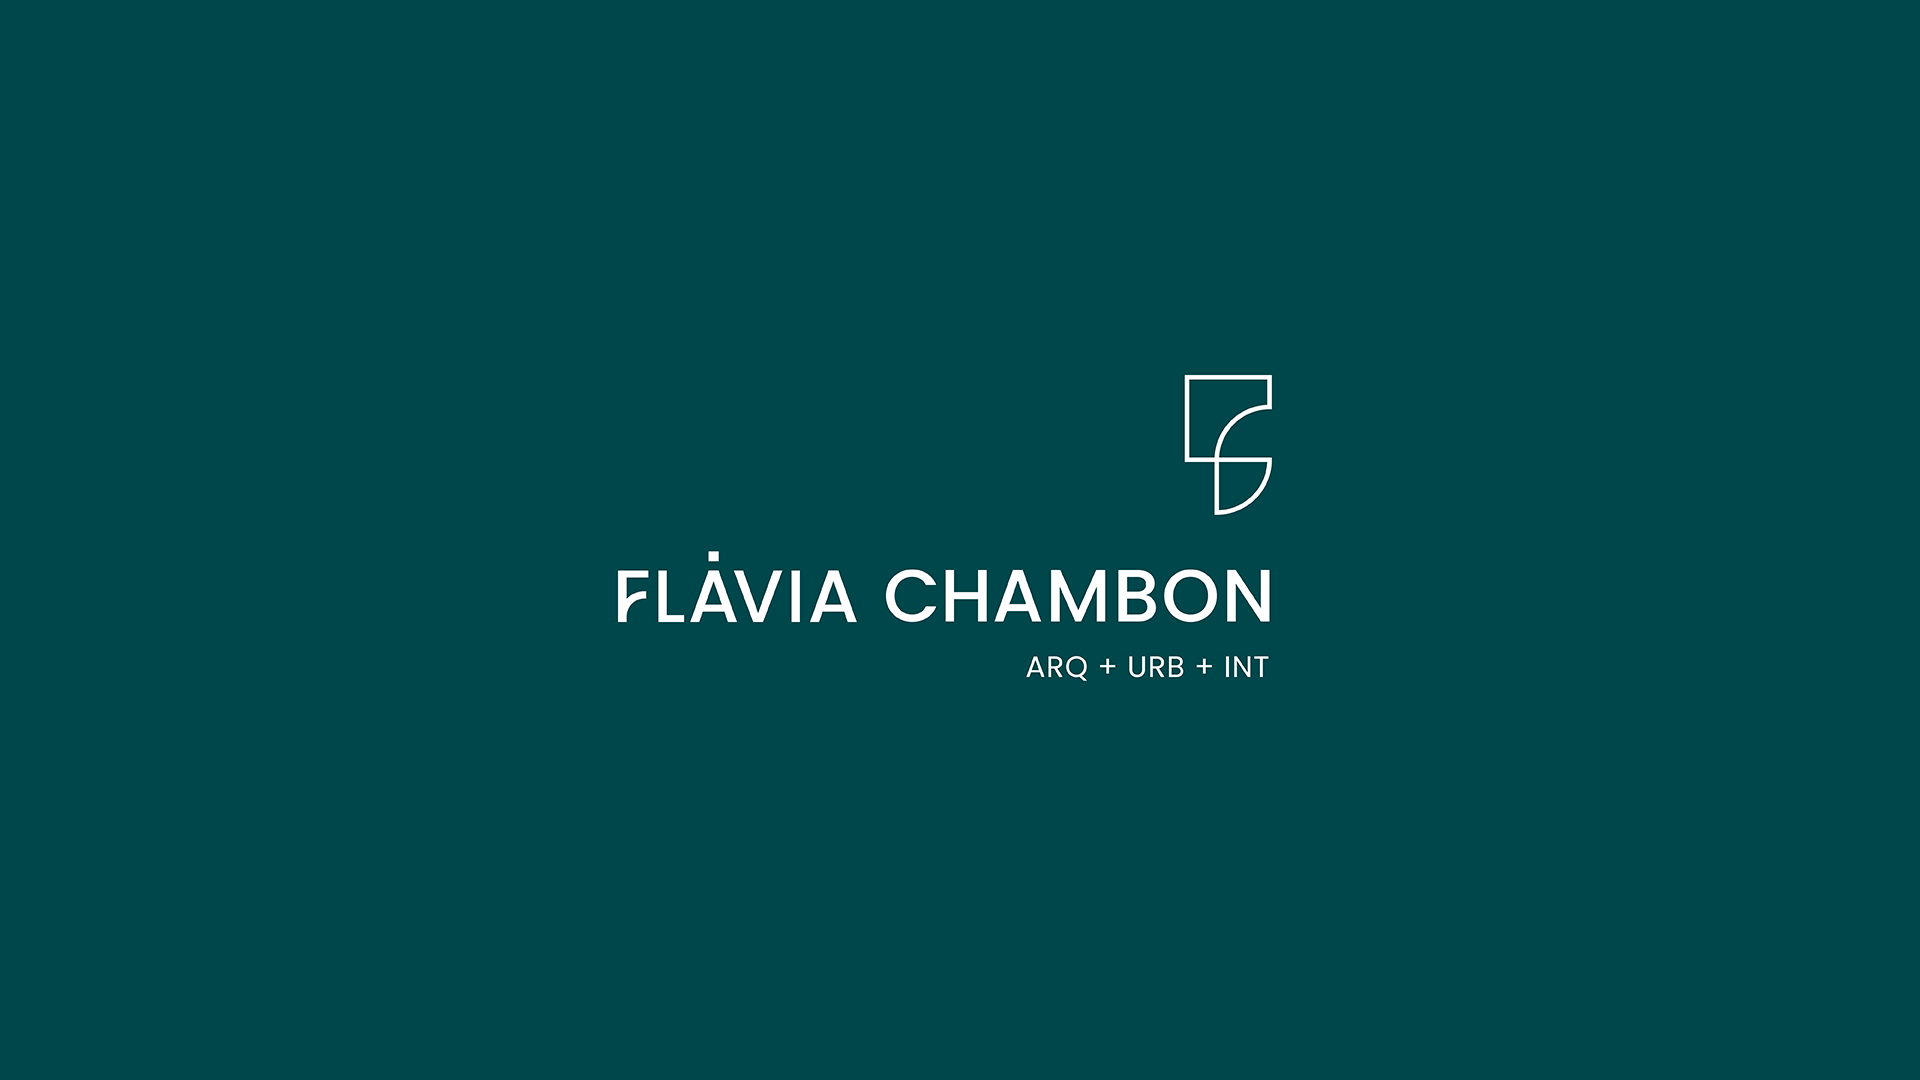 Apresentação_Flavia-Chambon_0424